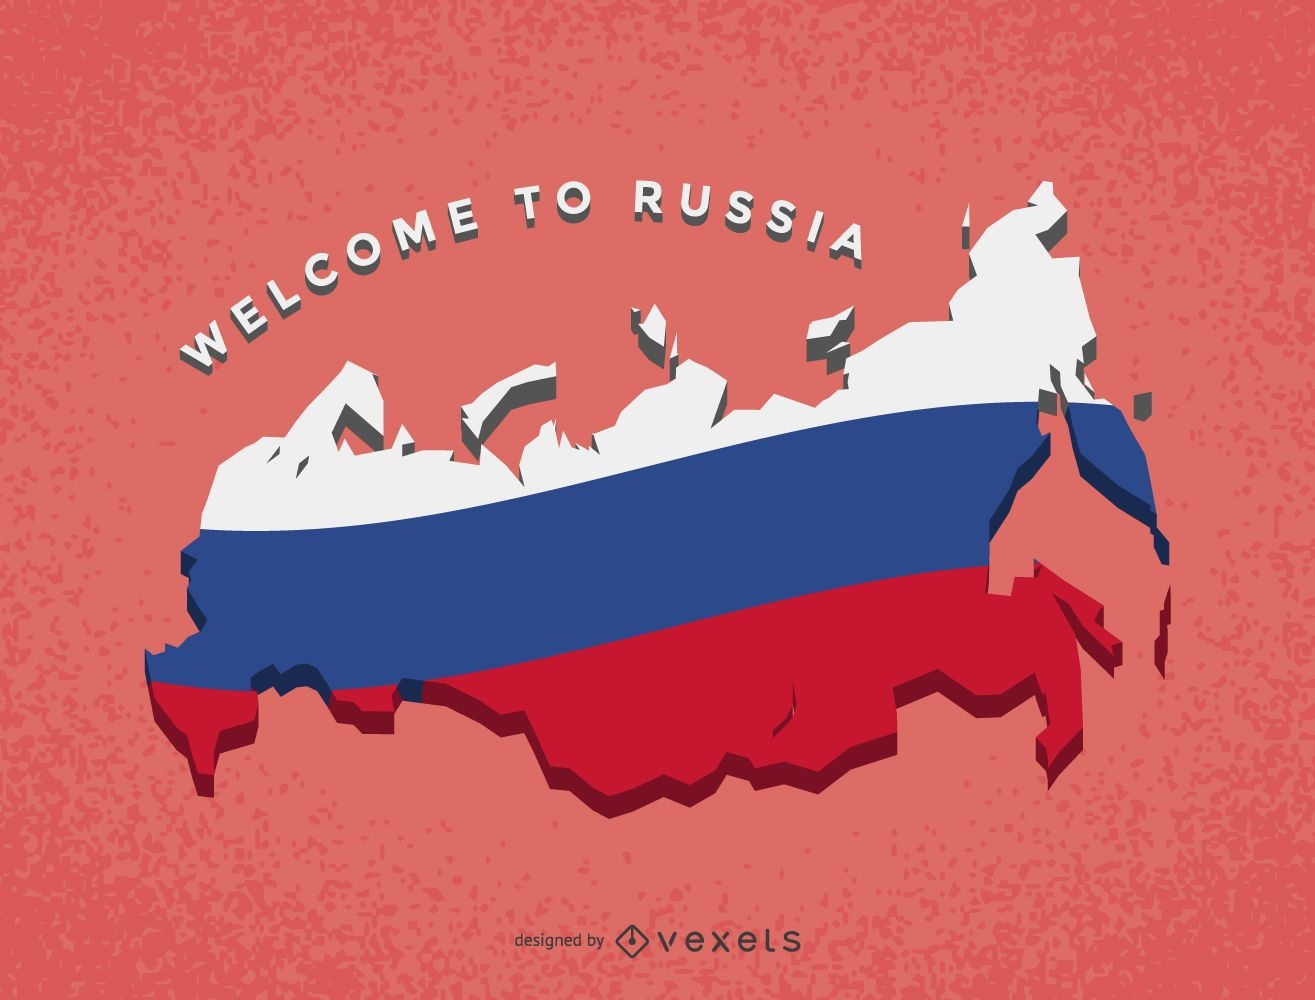 Premium PSD  Russian flag map